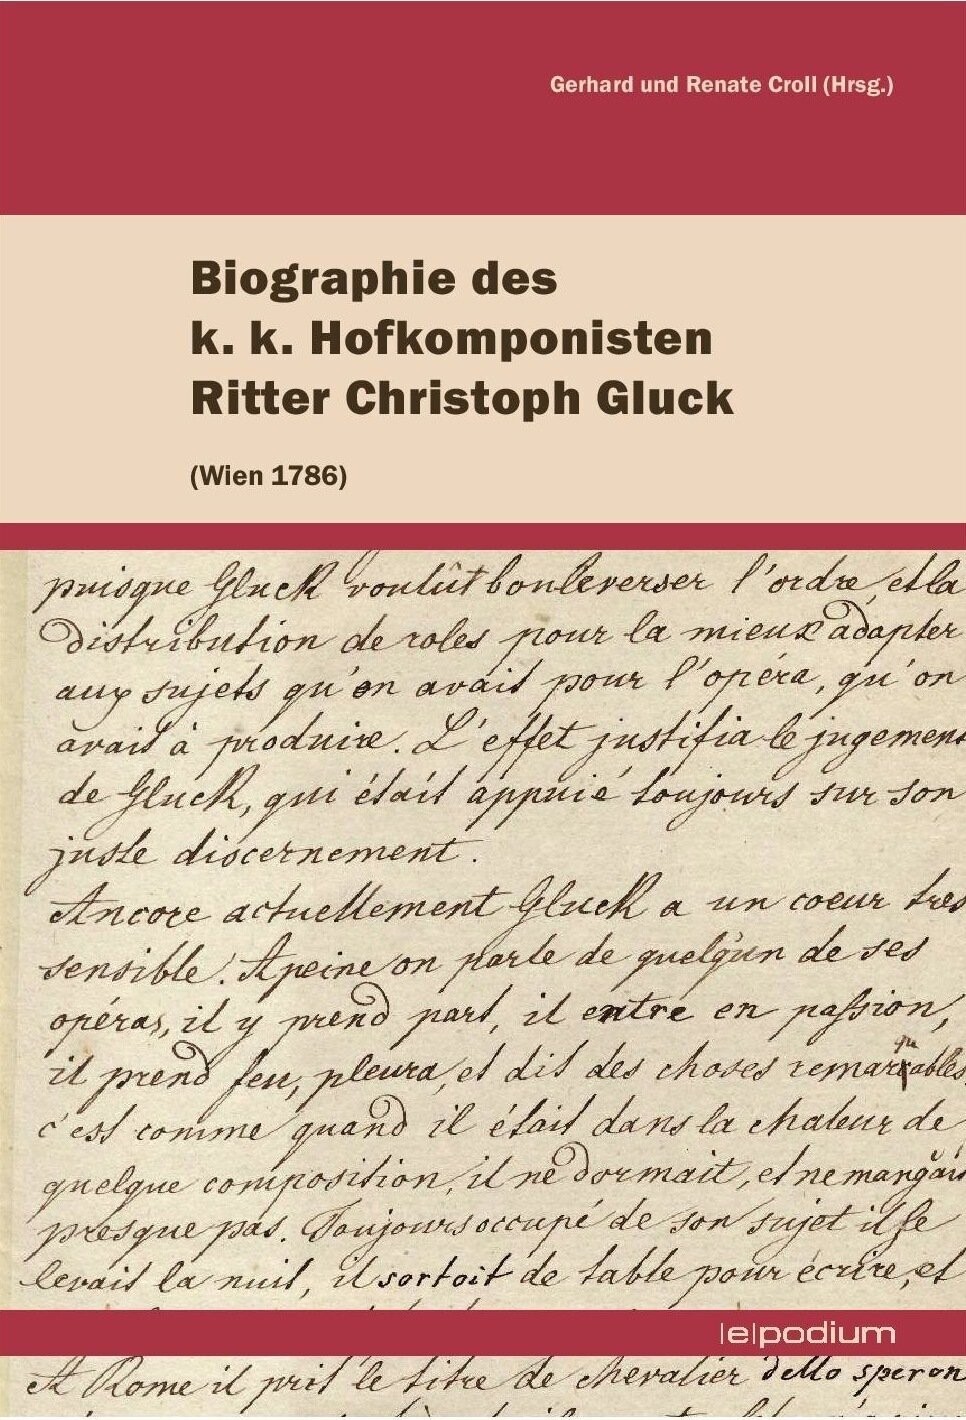 Gerhard u. Renate Croll (Hg.): Biographie des k. k. Hofkomponisten Ritter Christoph Gluck